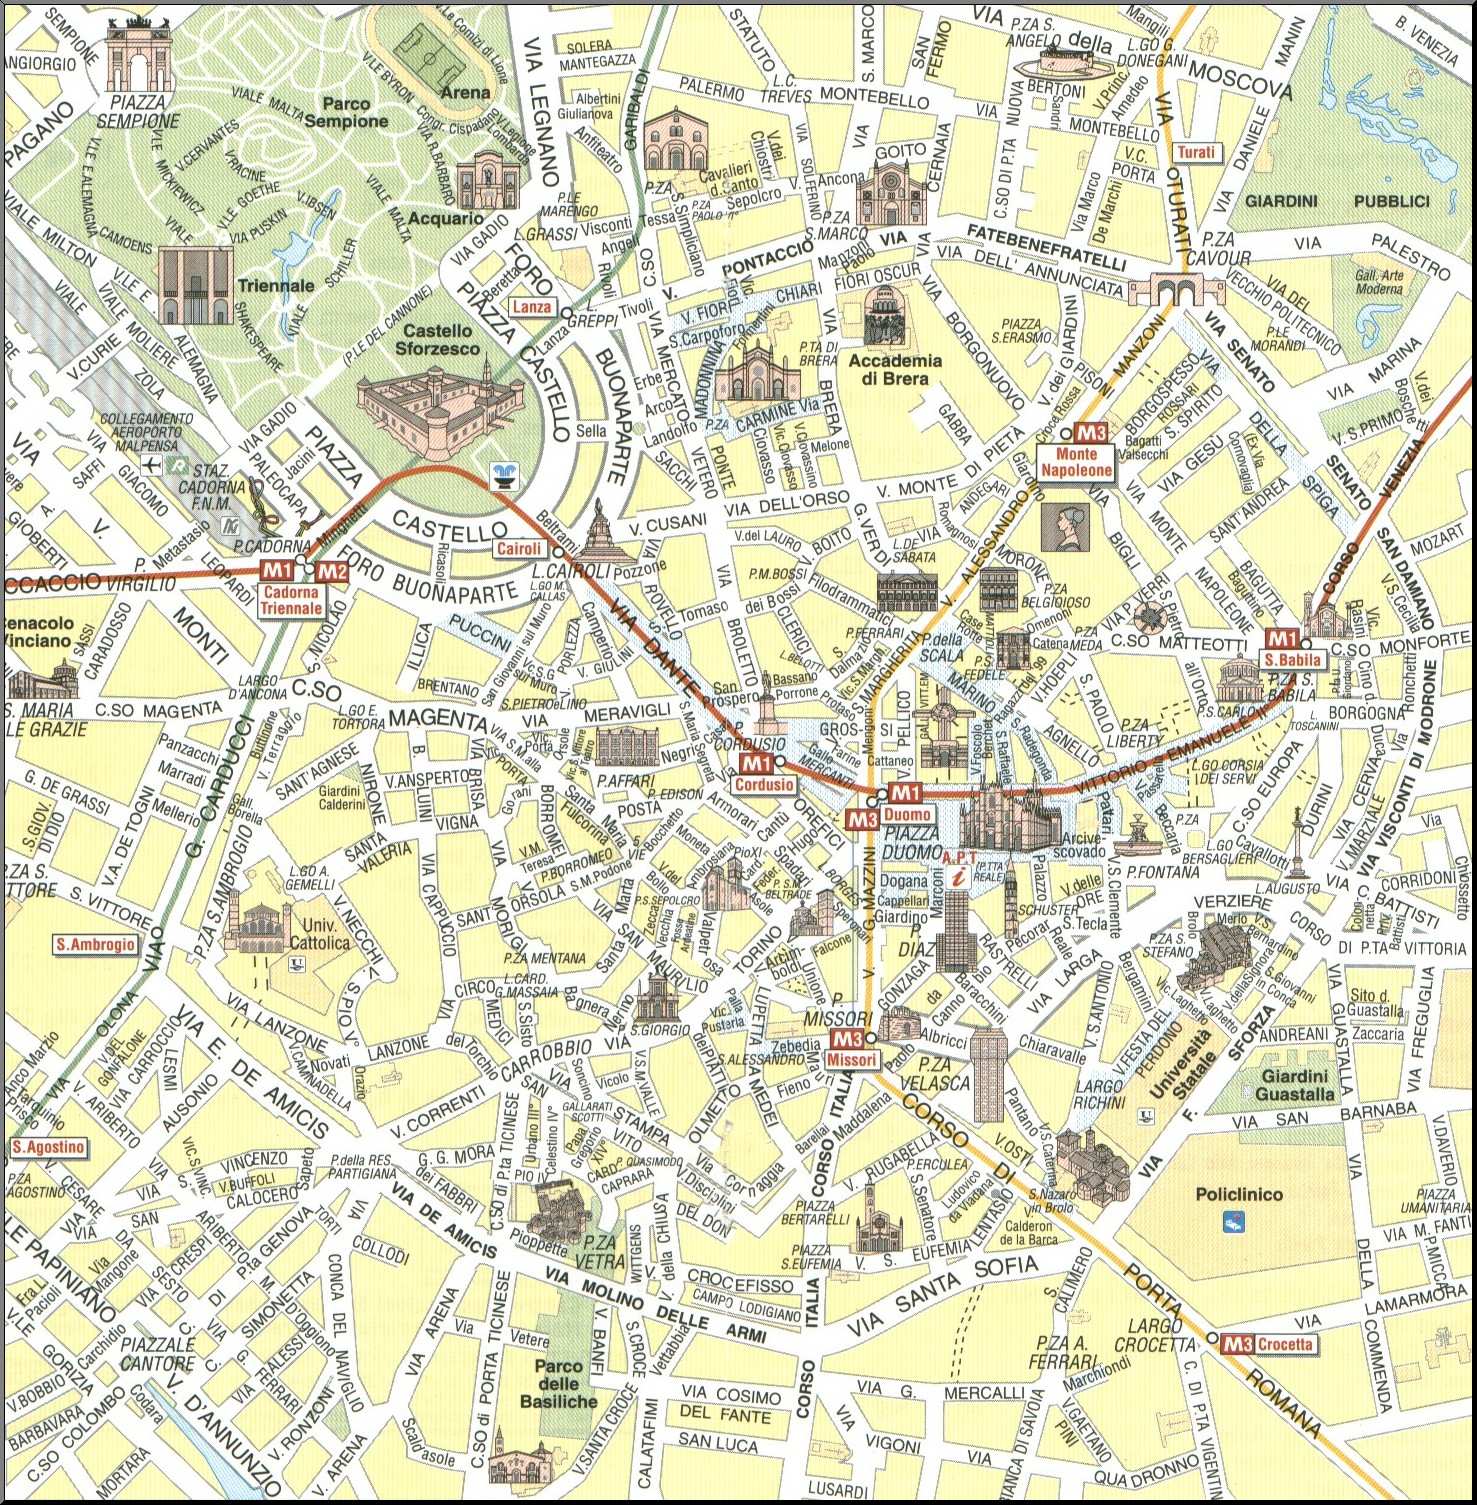 karta milano Large Milan Maps for Free Download and Print | High Resolution and  karta milano